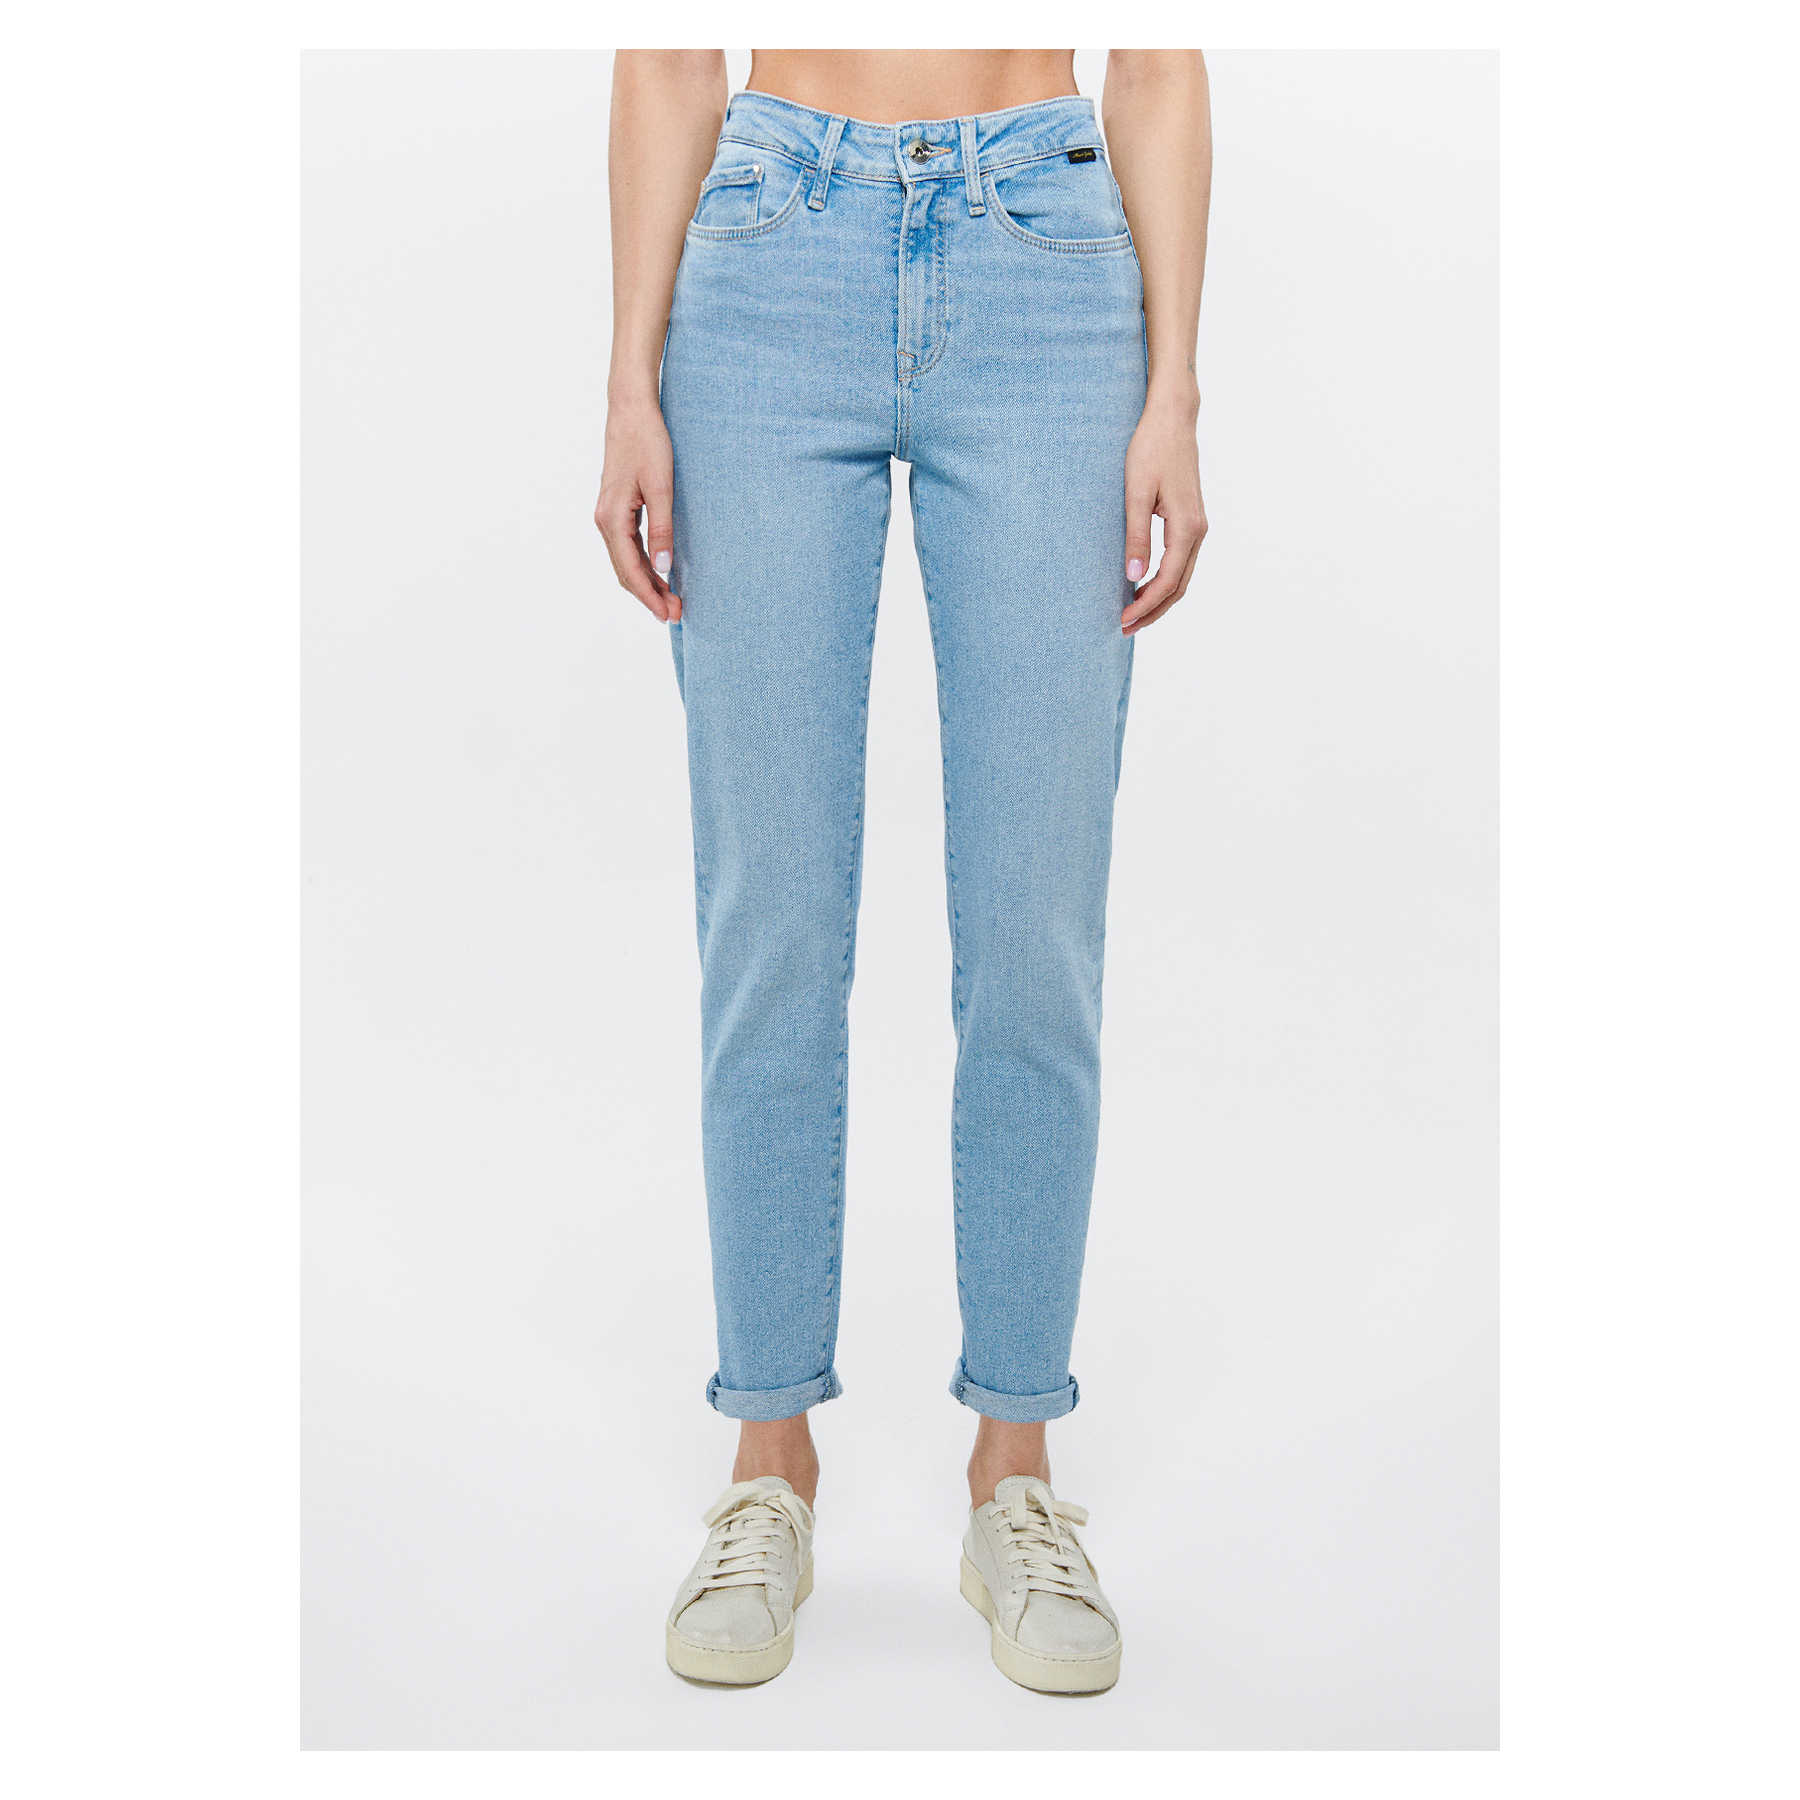 Mavi Jeans Cindy Gold Shape Kadın Mavi Kot Pantolon (100277-84410)